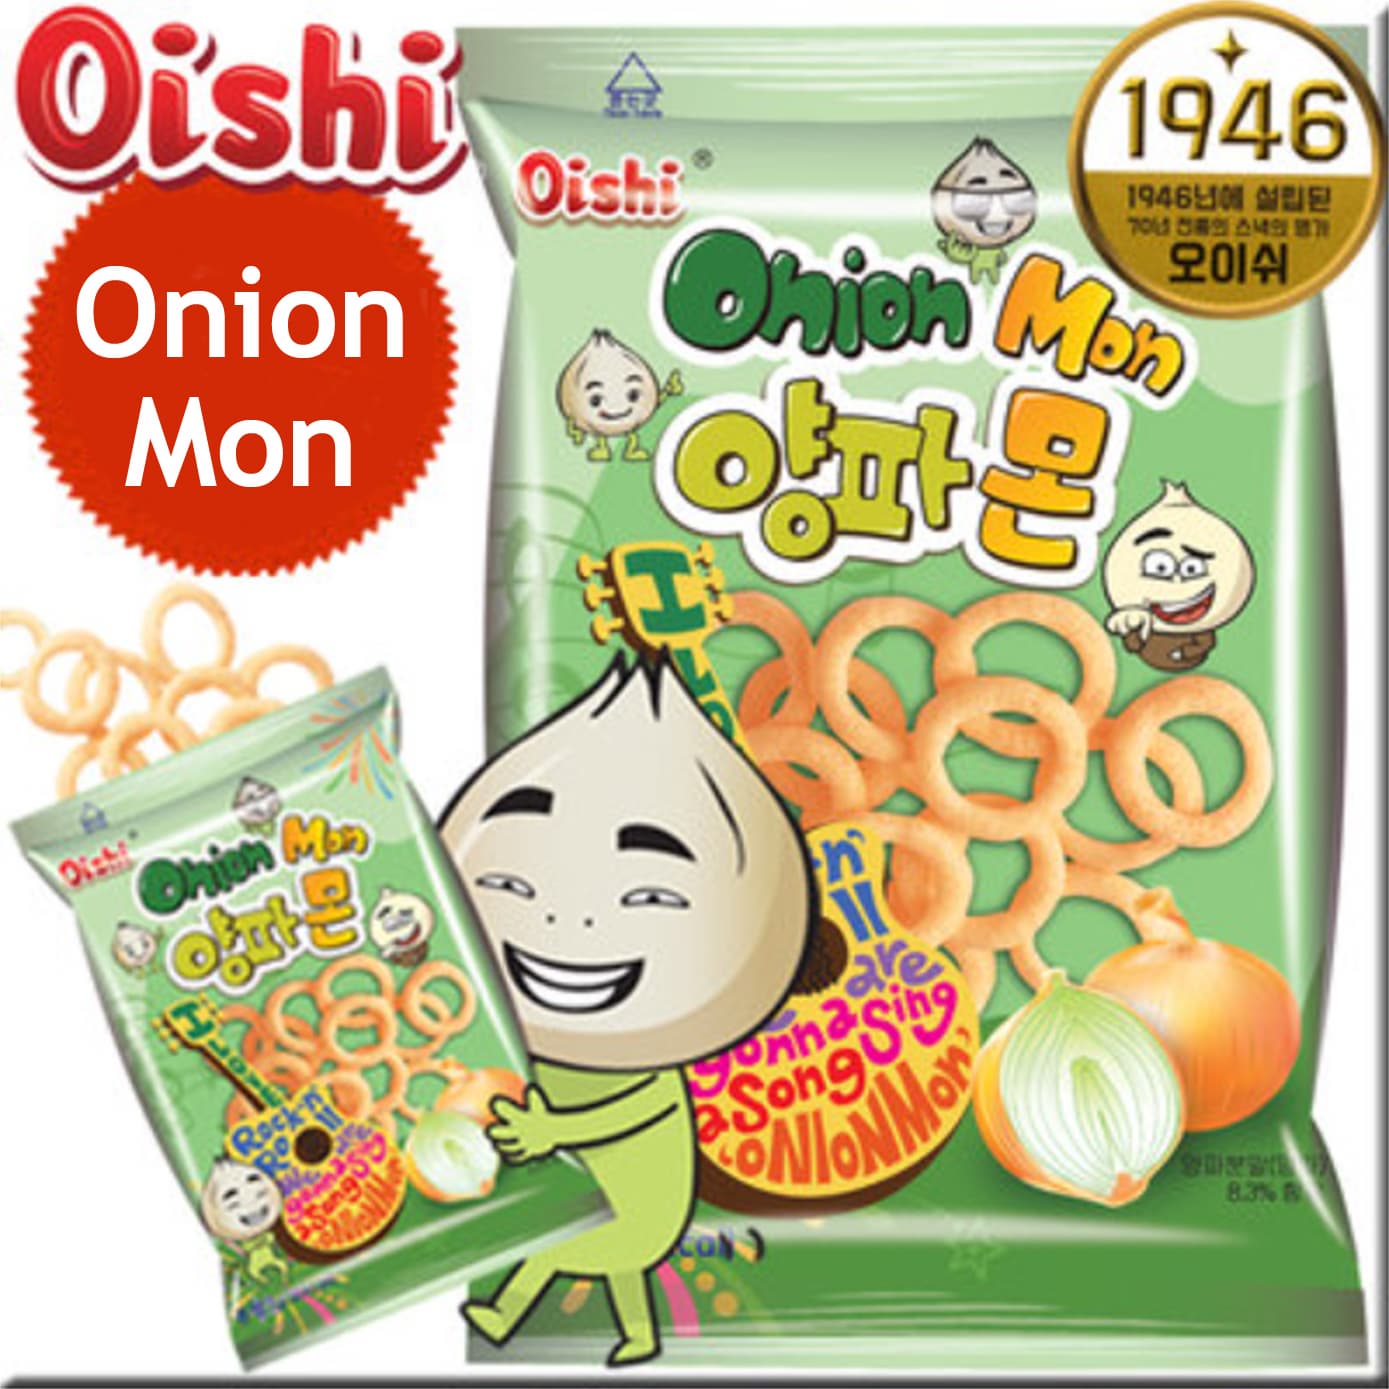 Onion Mon 7g